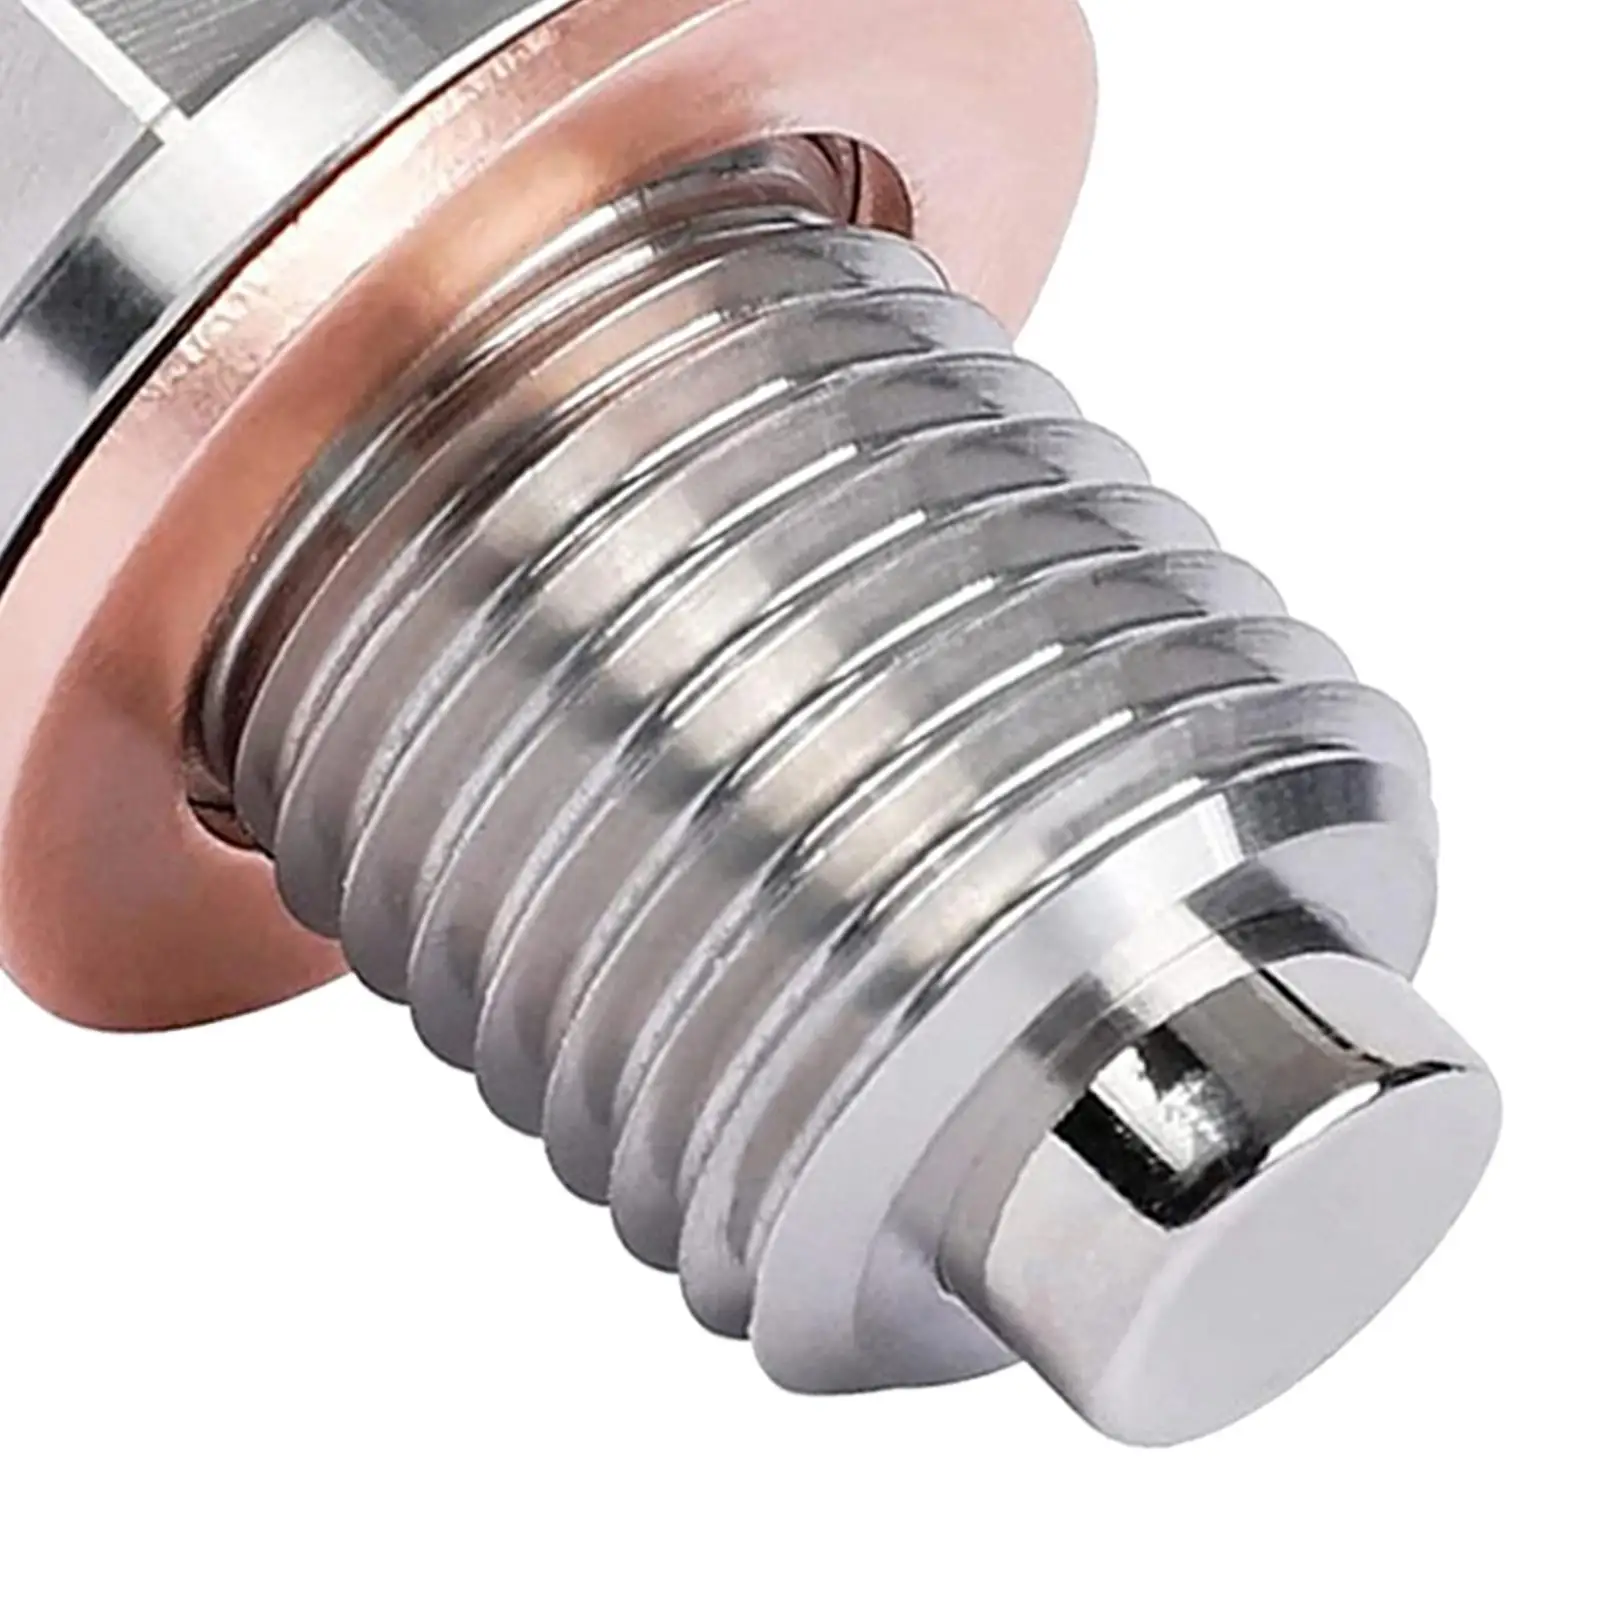 Oil Pan Drain Plug M12x1.5 Anti Leak Easy to Install Anti Vibration Sump Drain Nut Neodymium Magnet Bolt for Motorcycle Car